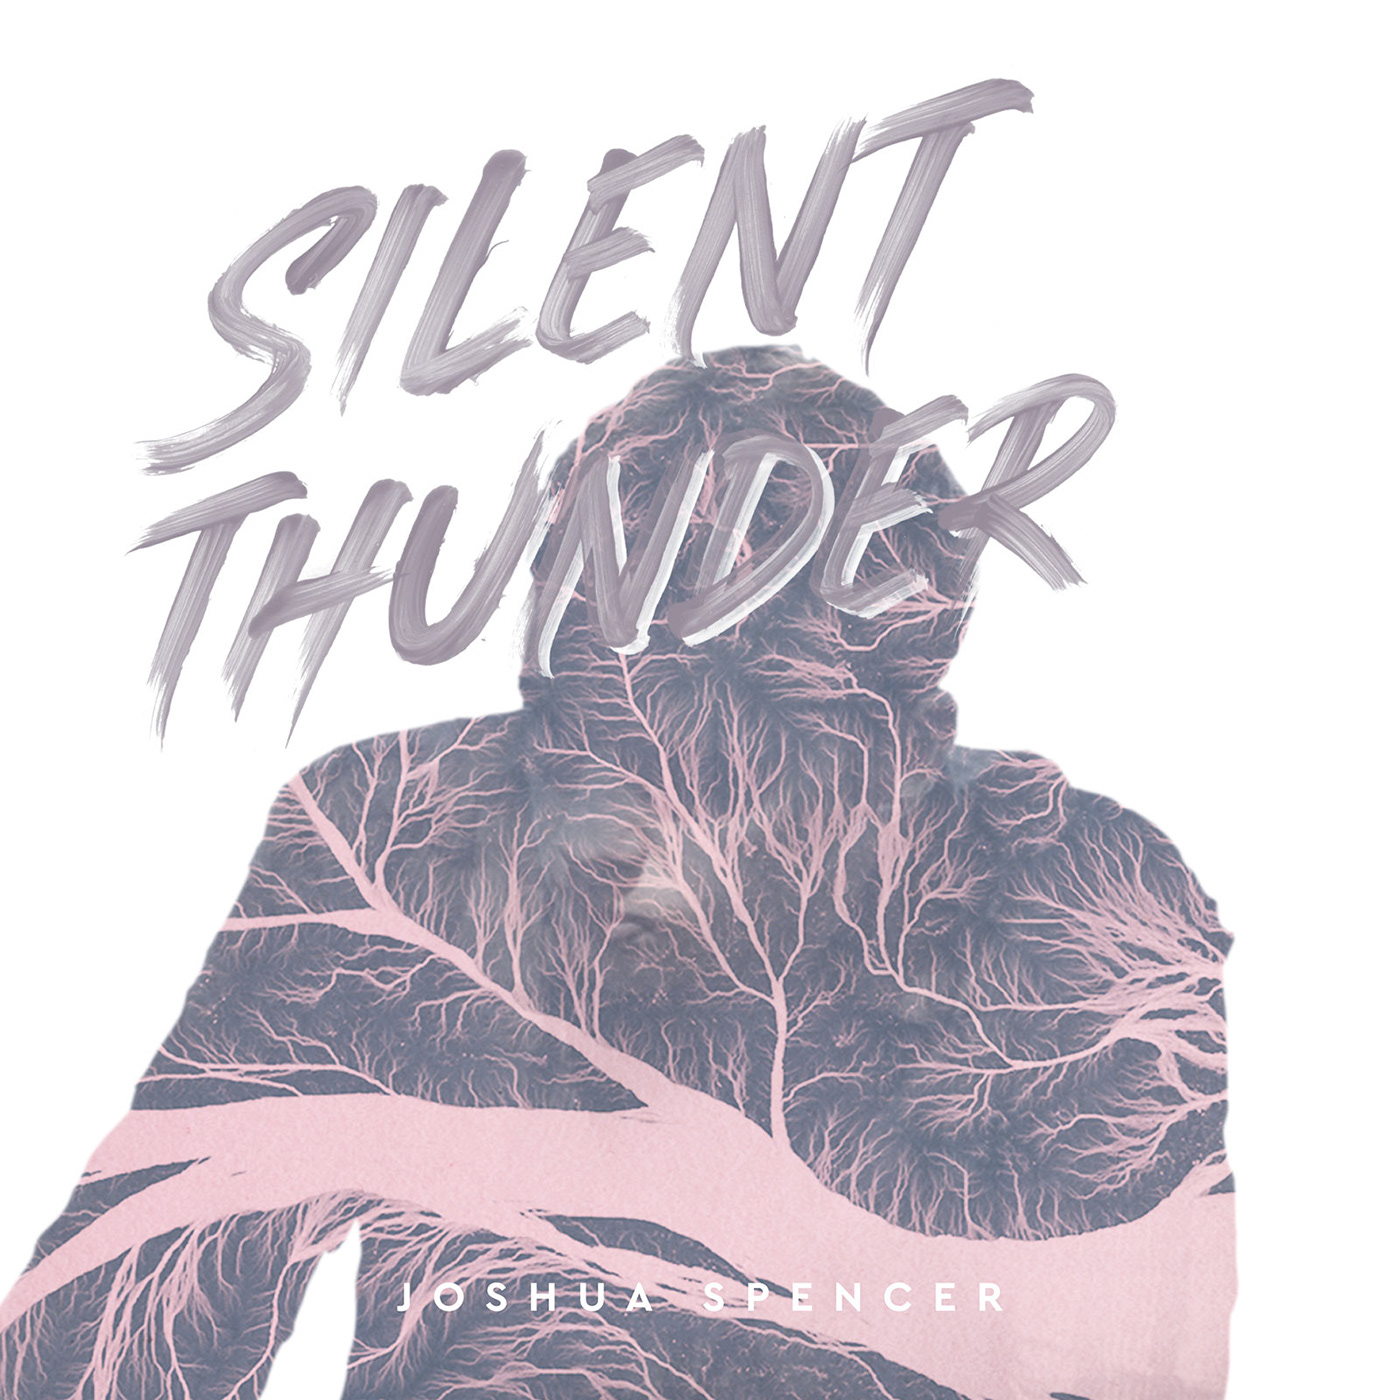 silent thunder Album cover music typography   grunge double exposure rock album cover